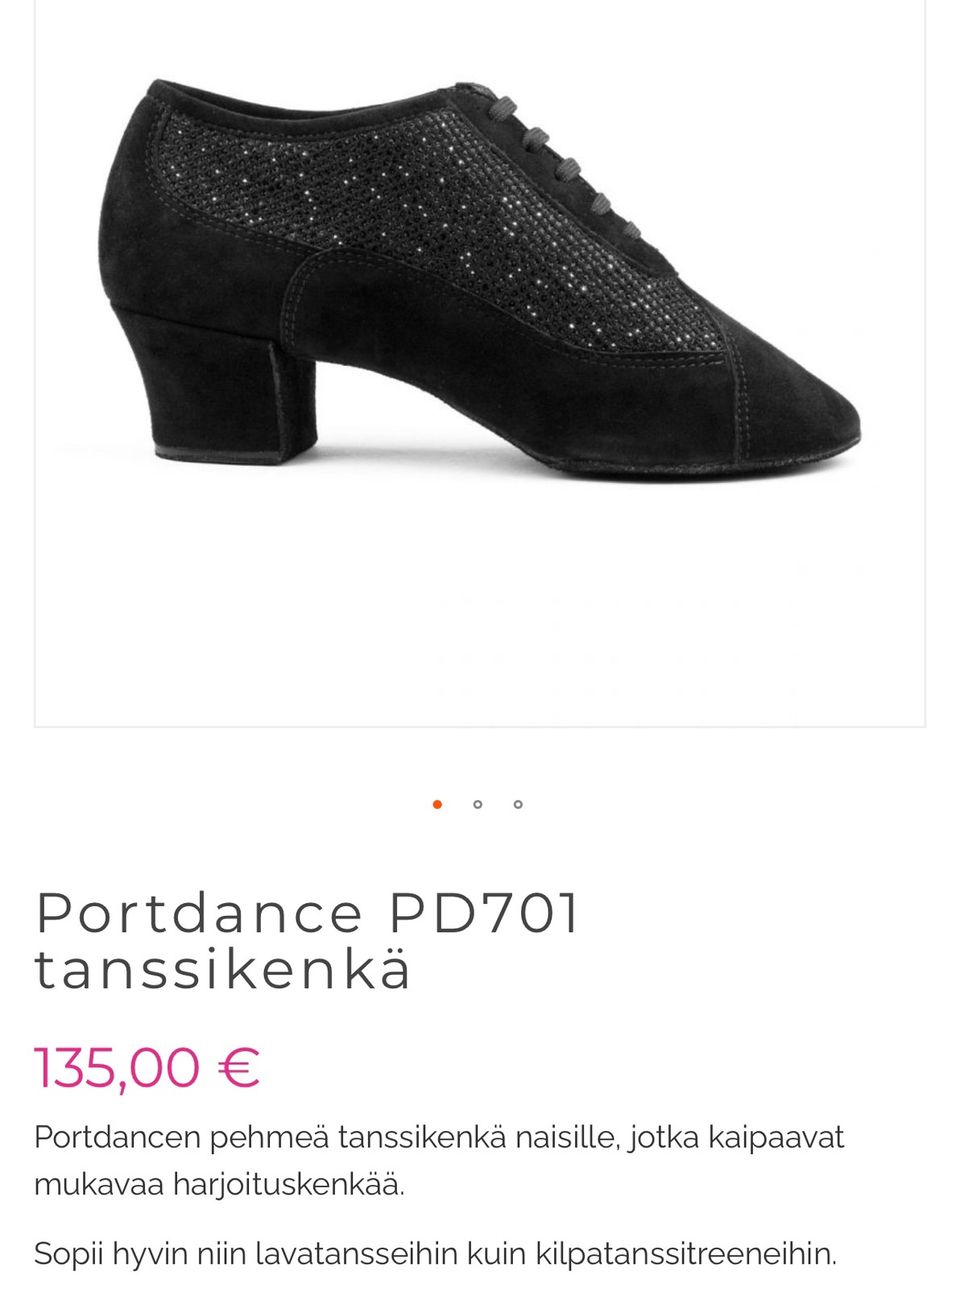 Portdance Premium tanssikengät (Oulu, Tampere, Helsinki)